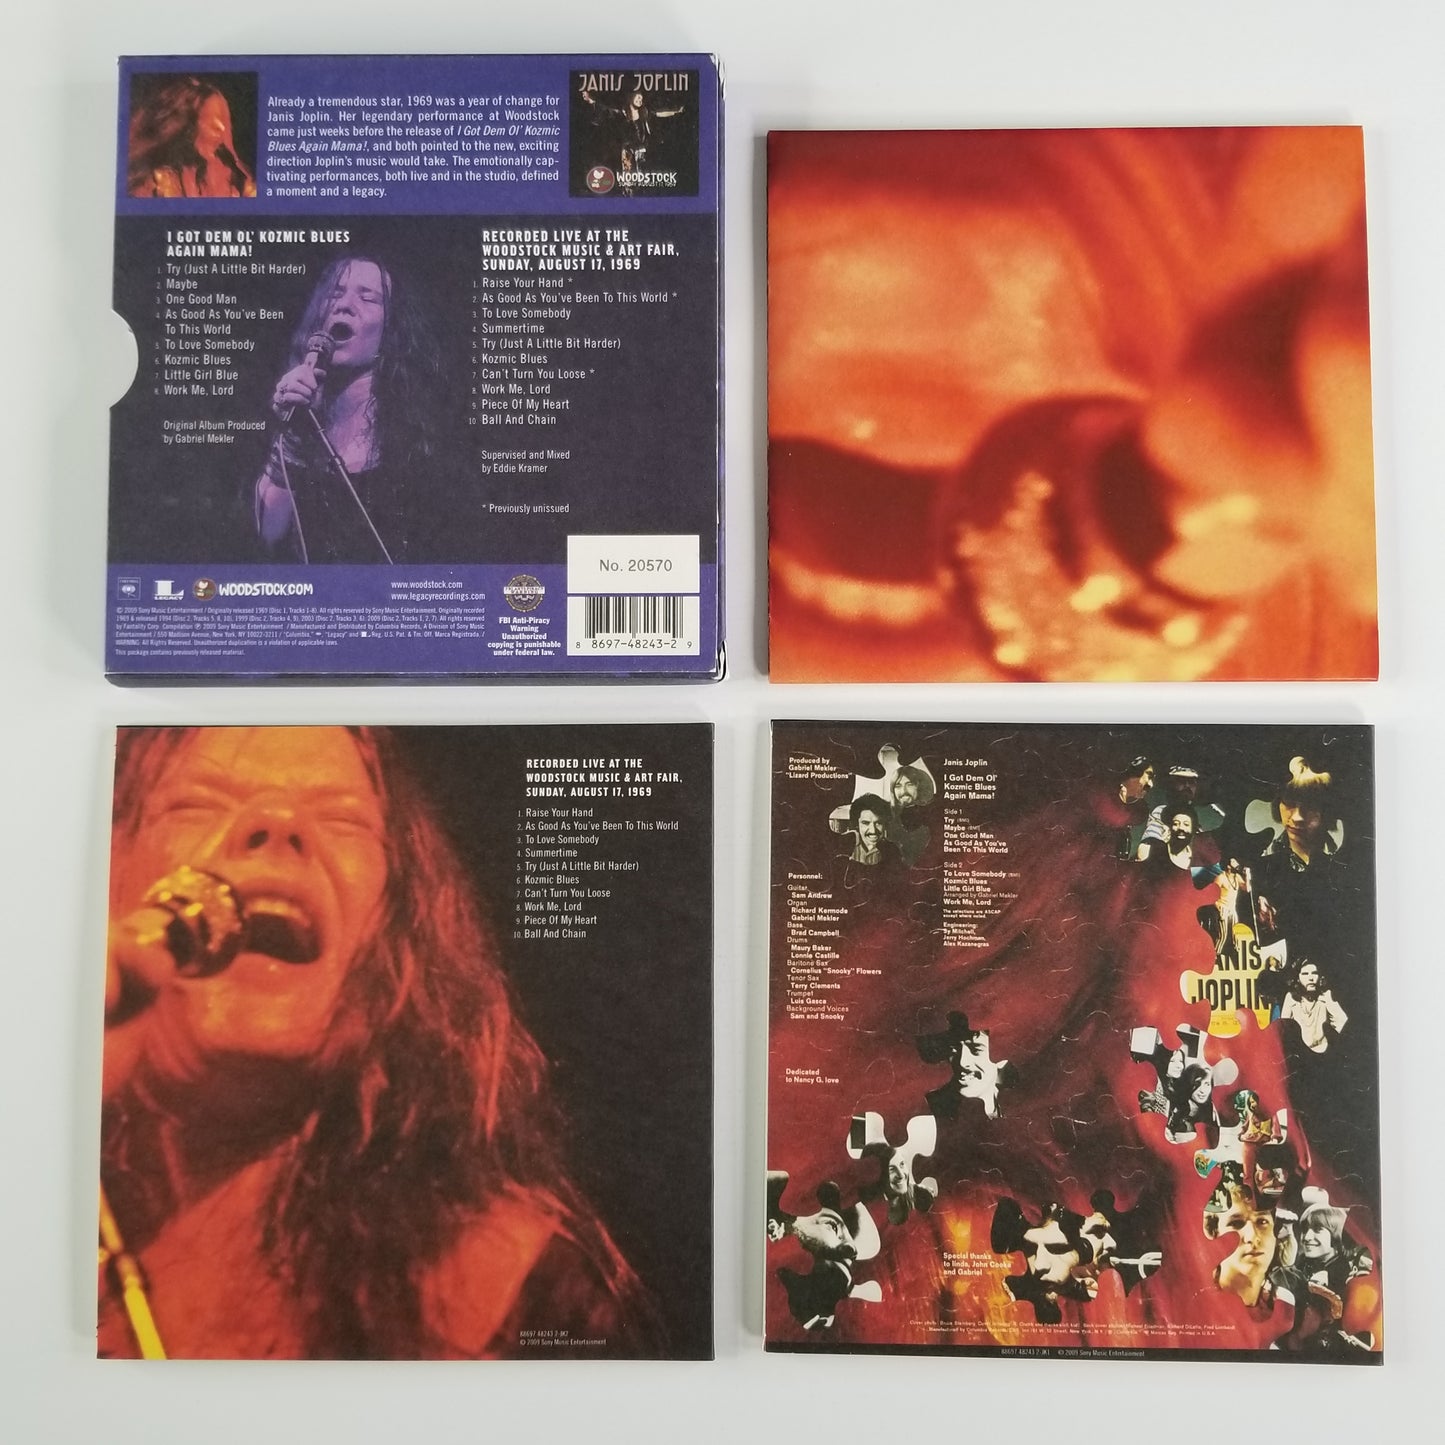 Janis Joplin – The Woodstock Experience (2009, 2x CD Set) 88697 48243 2